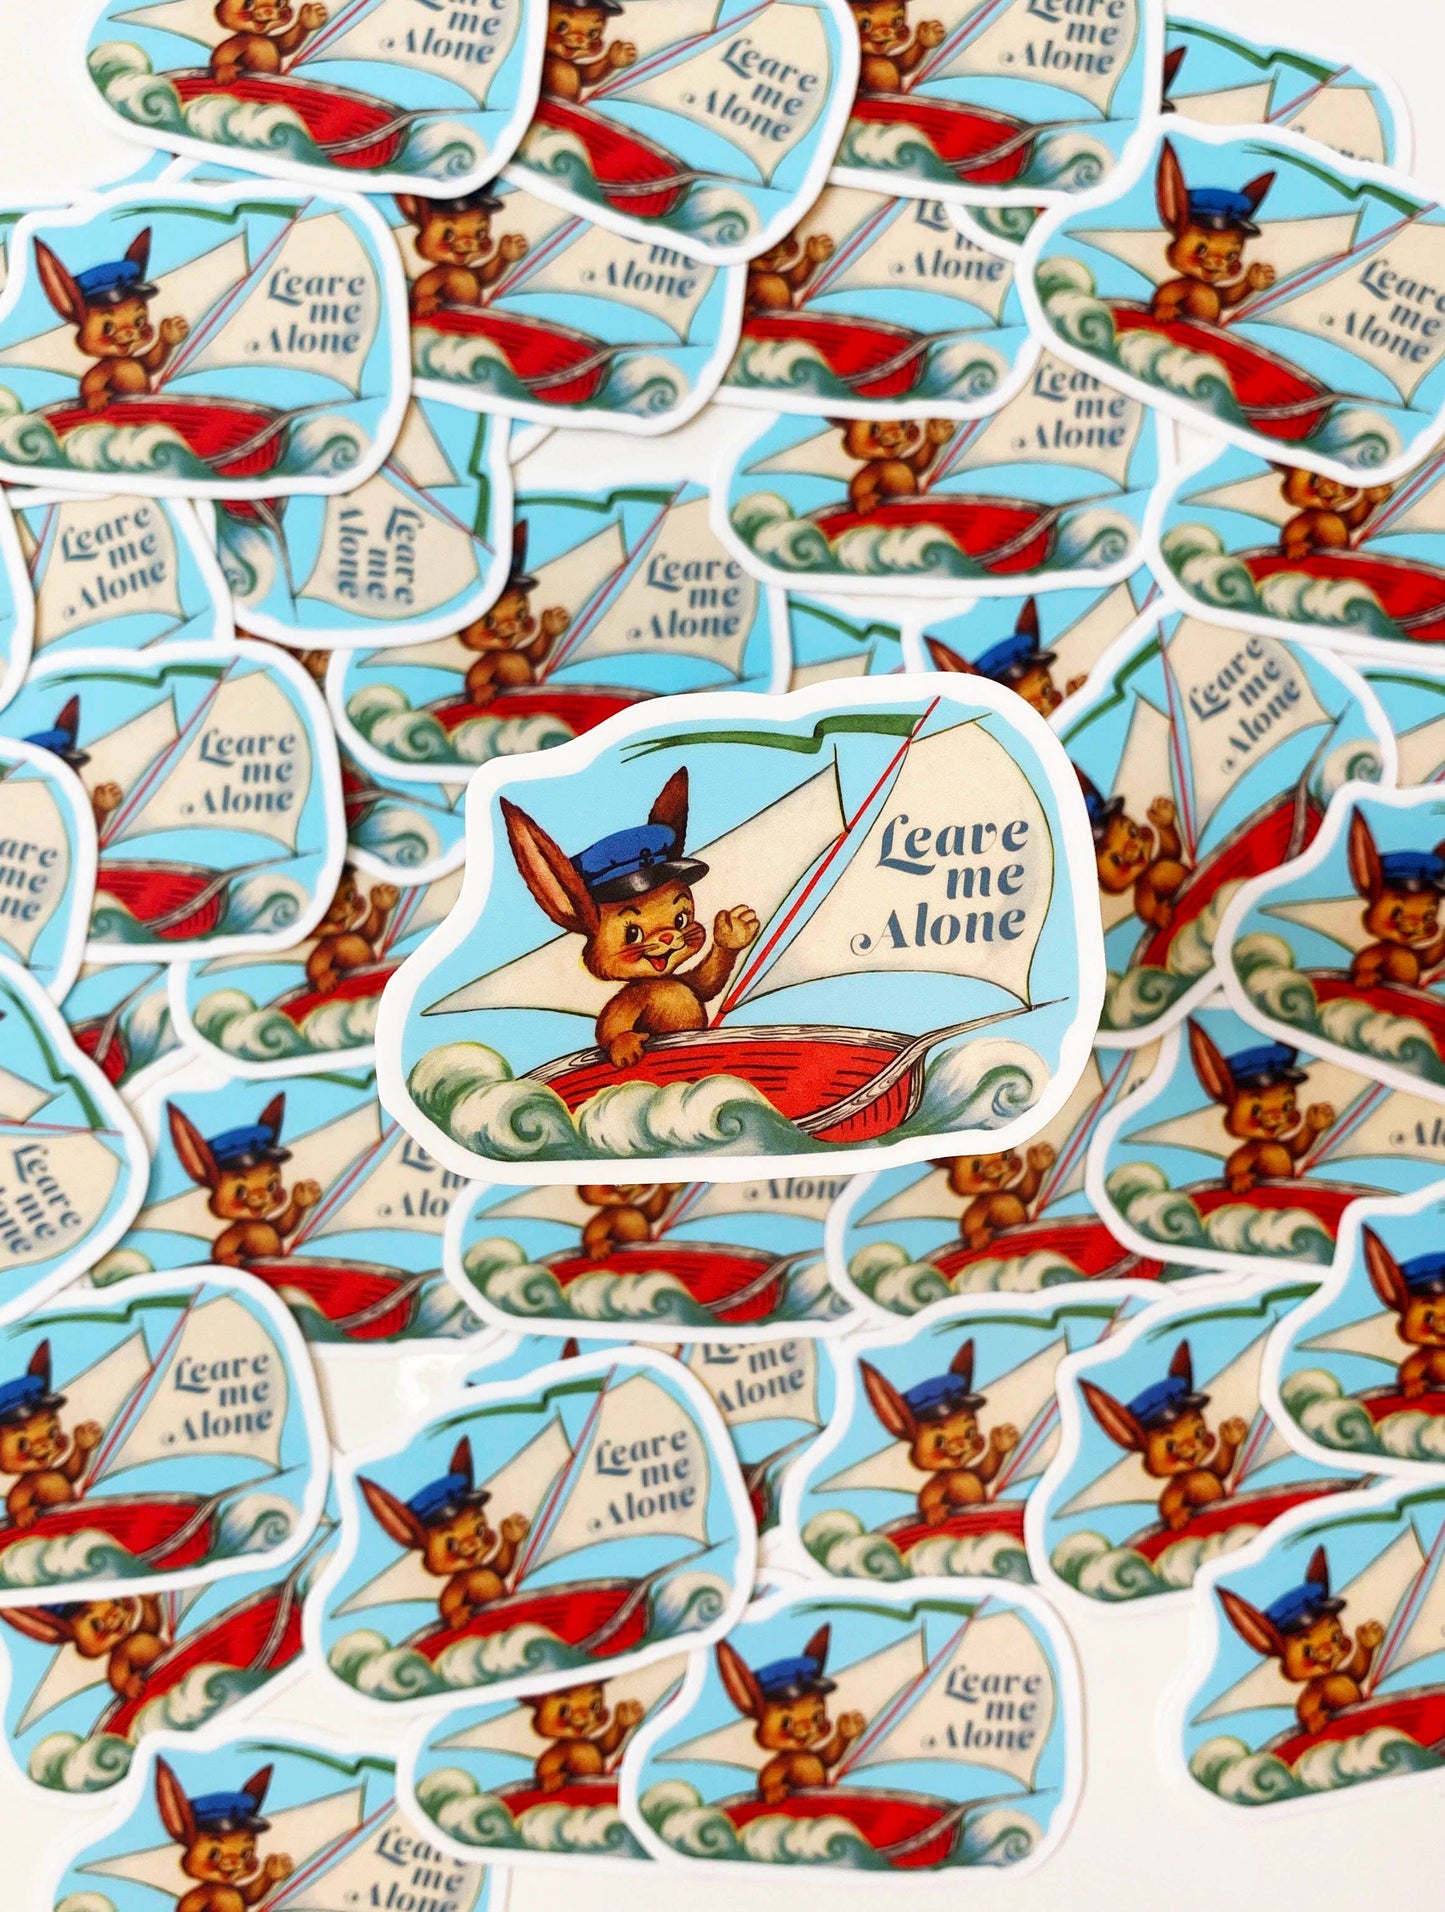 Leave Me Alone Sticker - Funny Rabbit in Boat Stickers